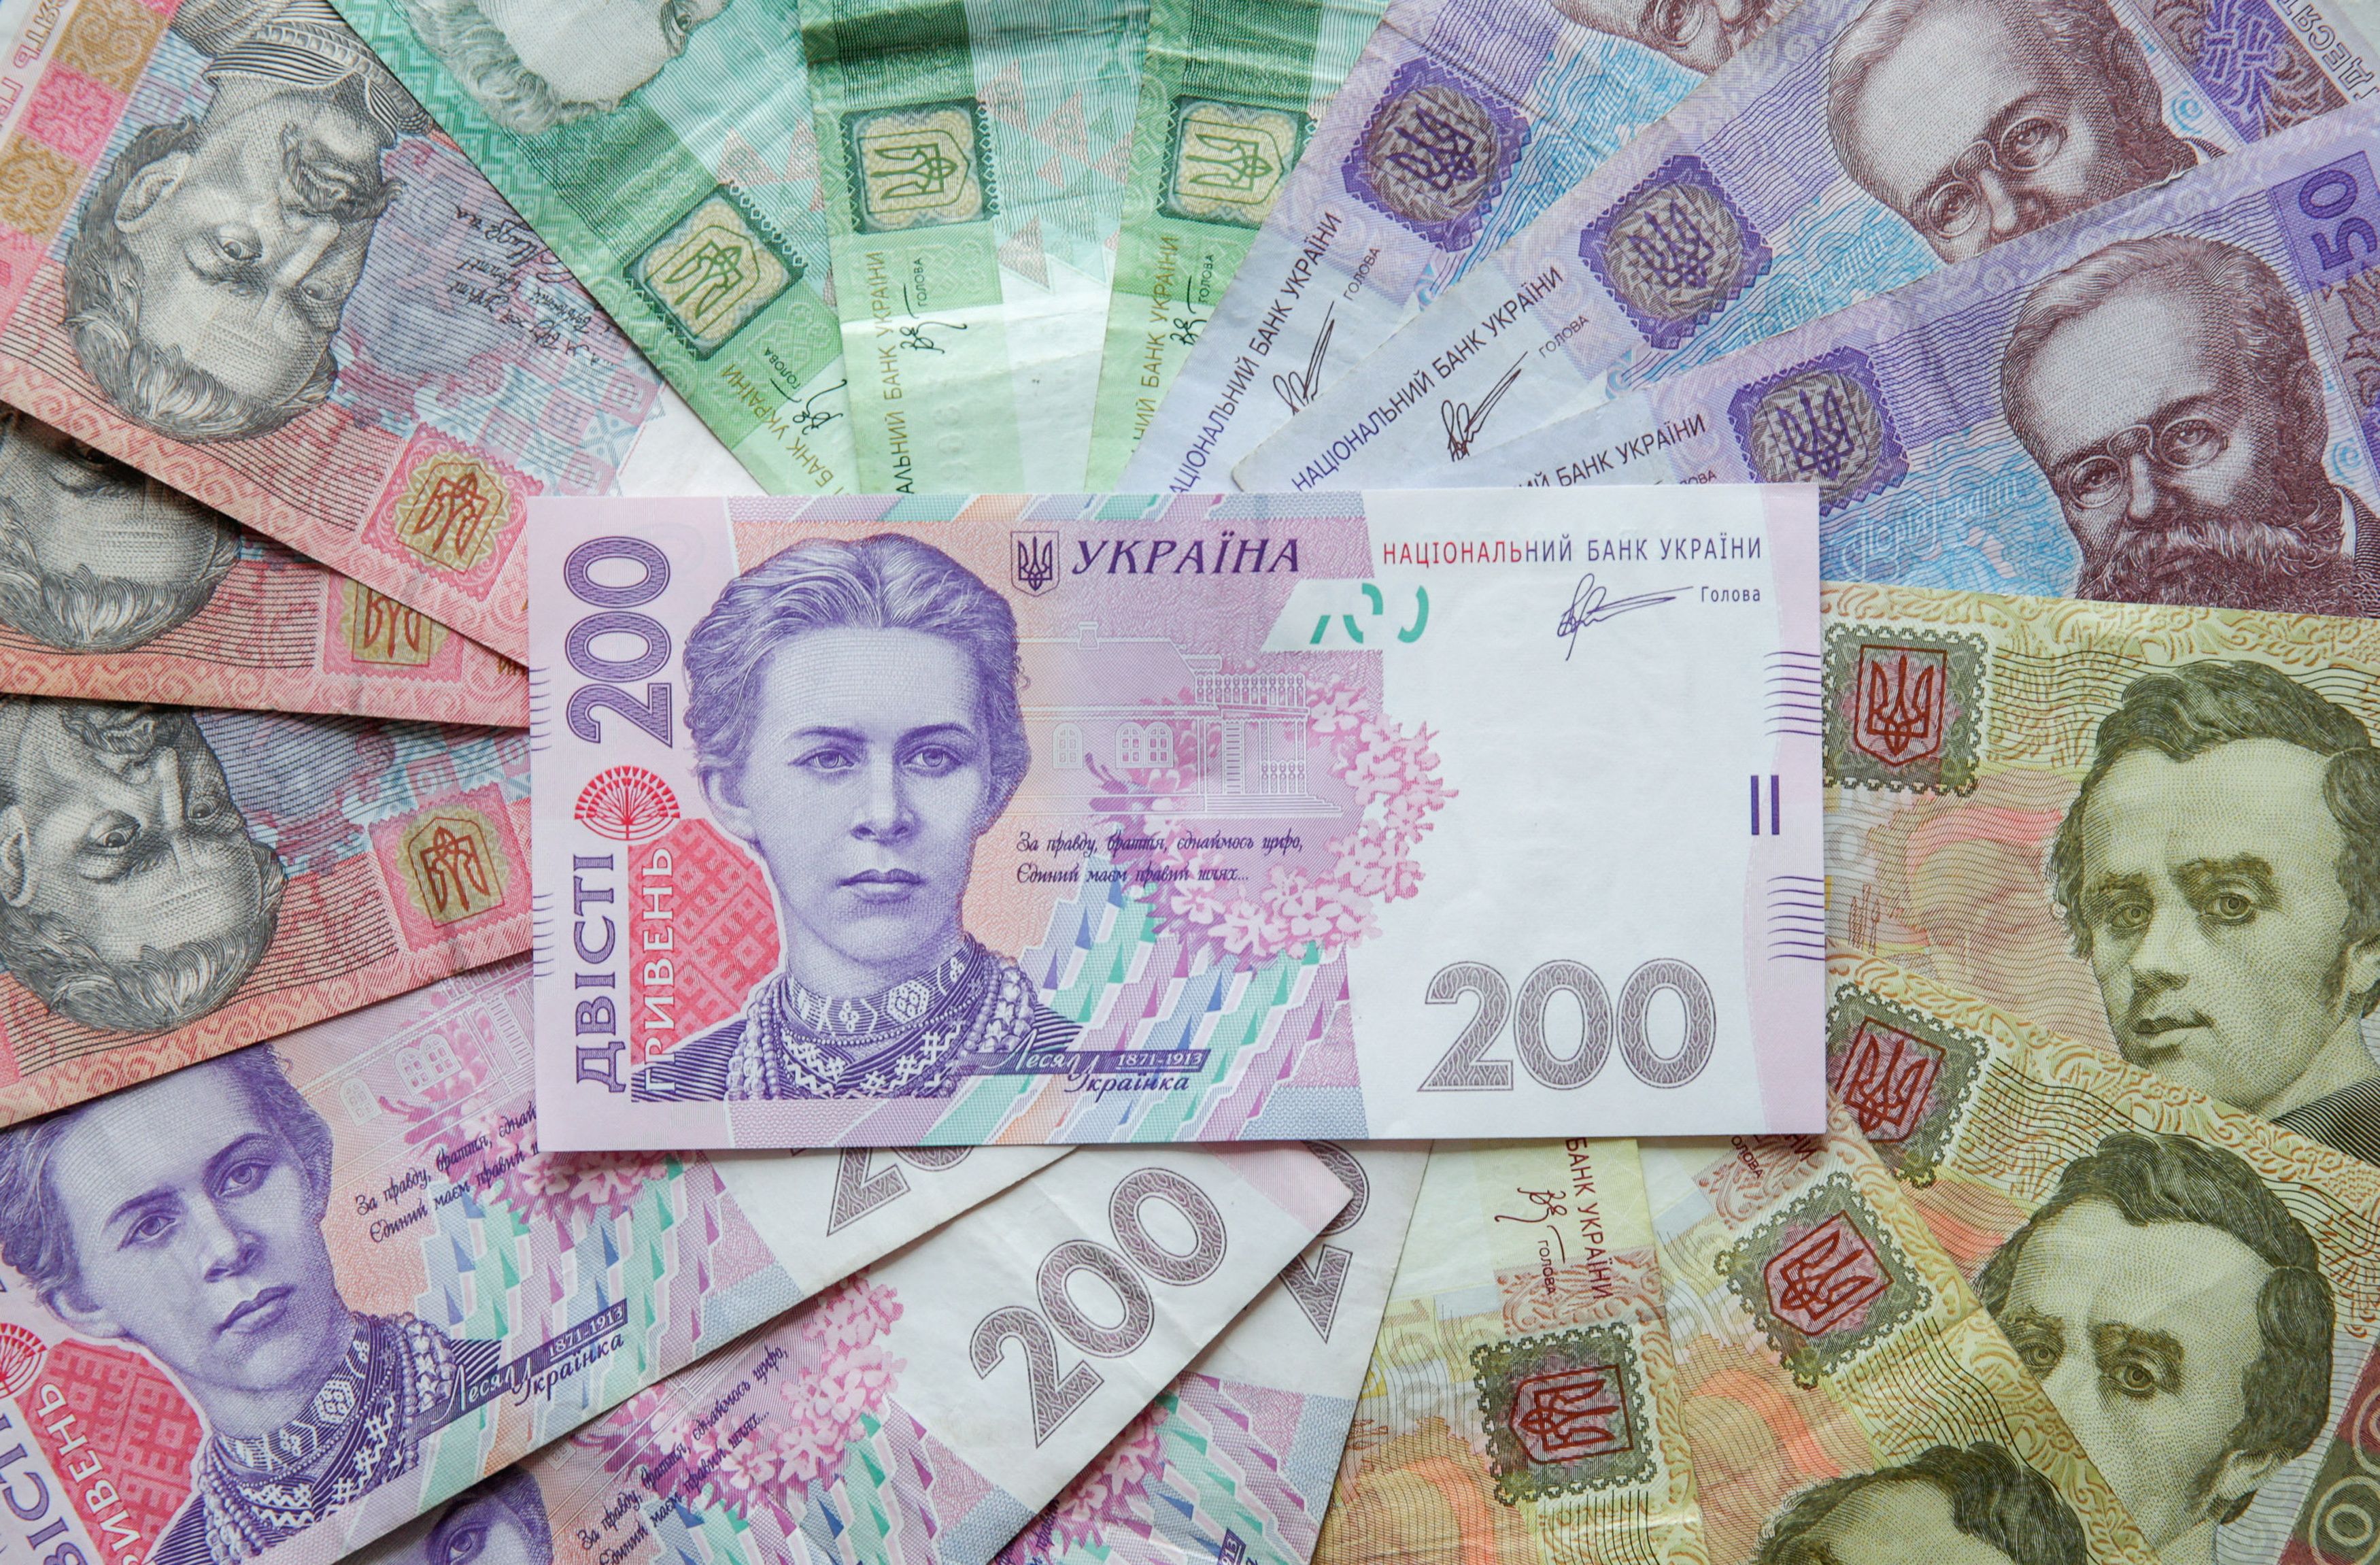 Ukrainian hryvnia banknotes are seen in a photo illustration shot in Kiev